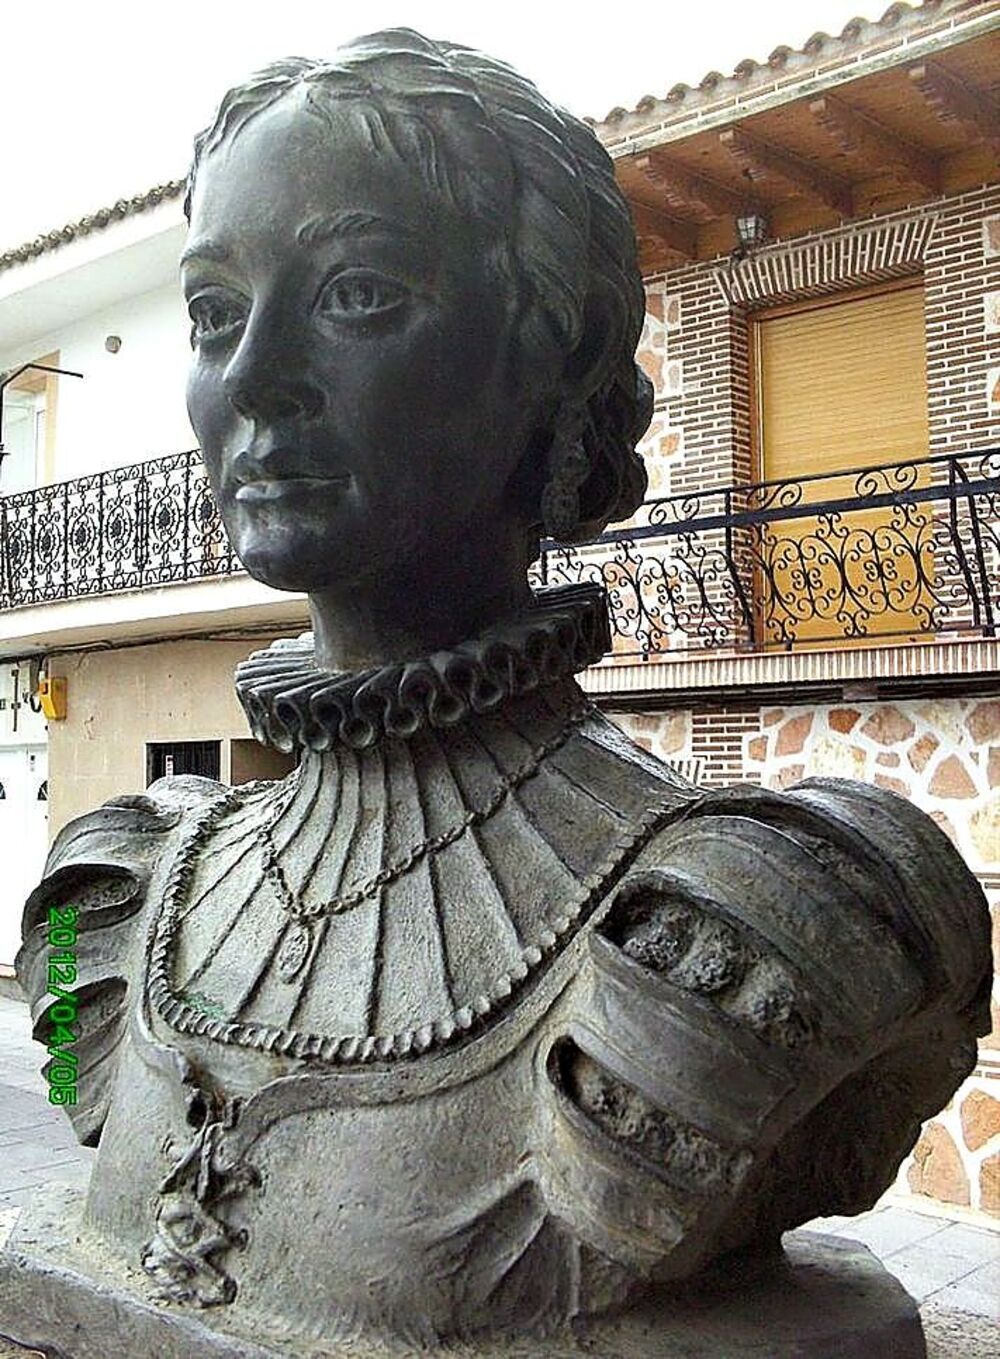 Escultura de Catalina de Palacios, esposa de Cervantes, en Esquivias (Toledo).